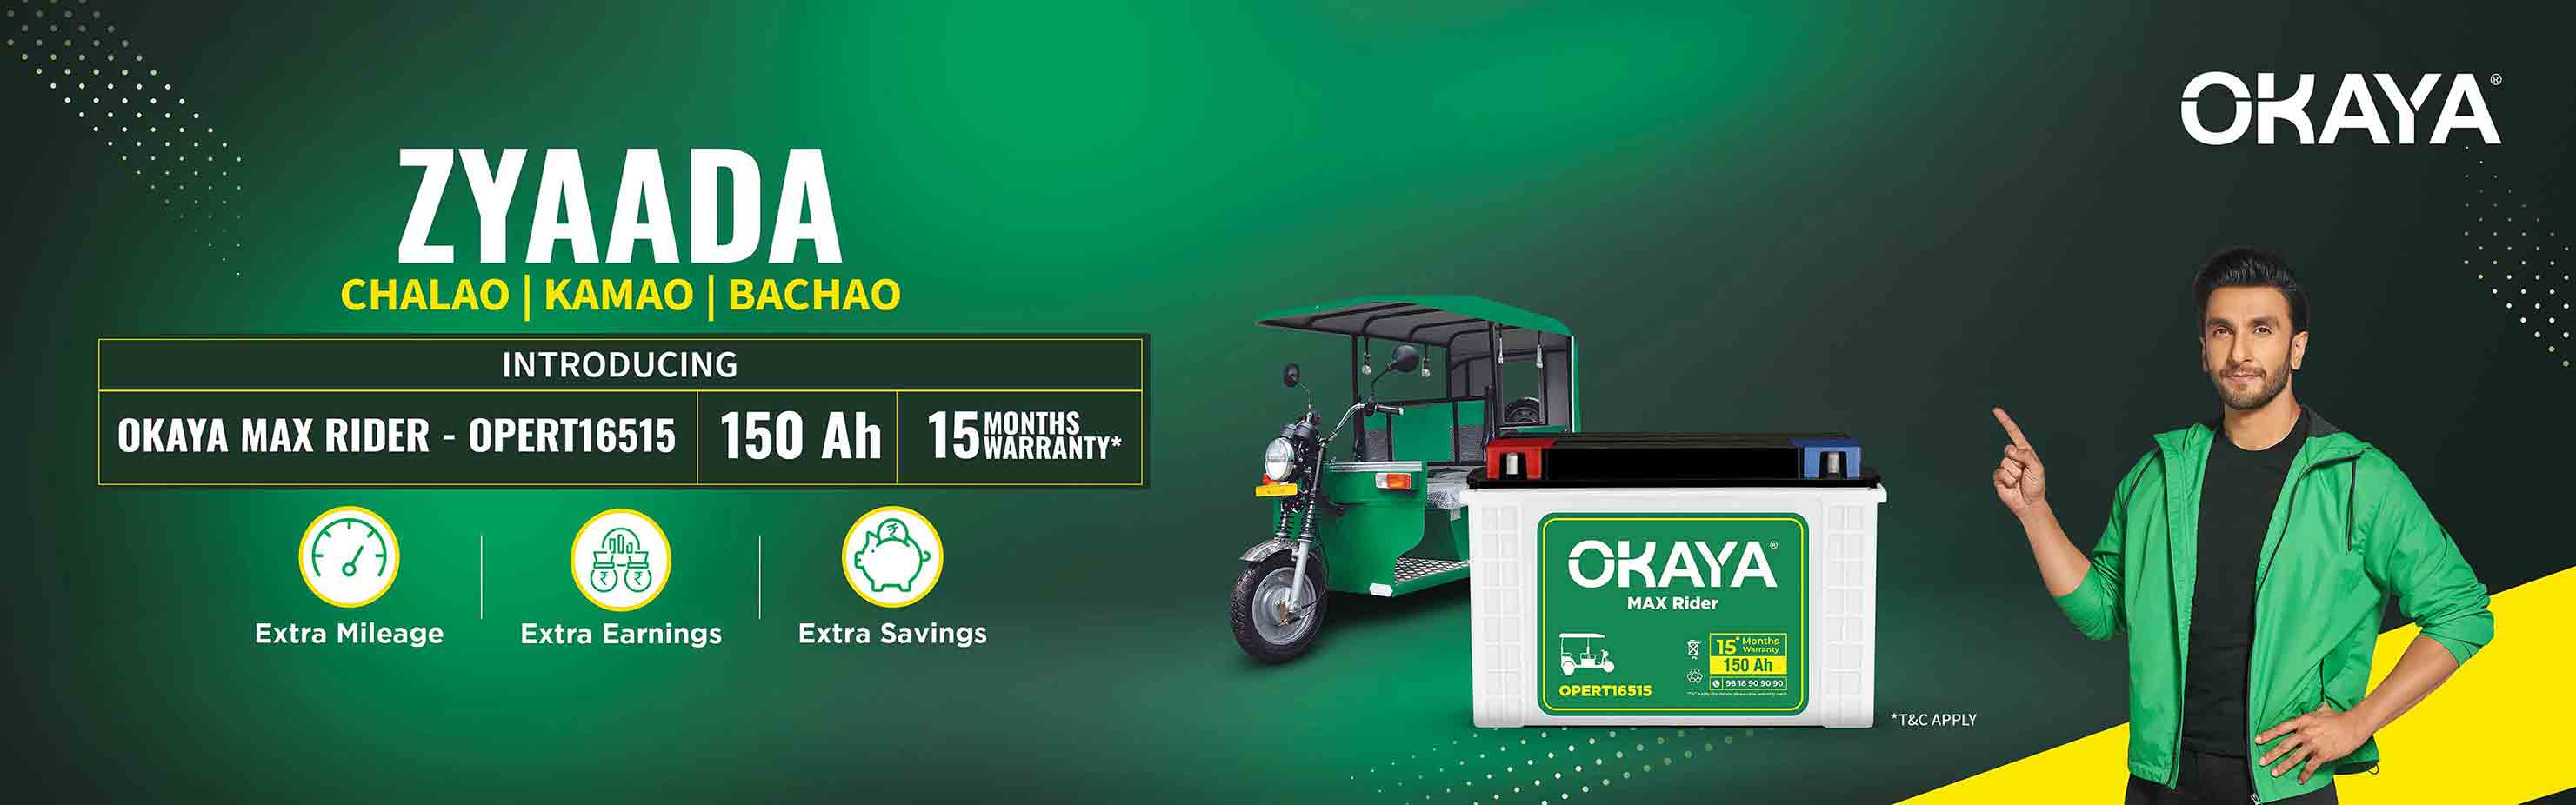 Okaya is introducing 150Ah E-rickshaw Battery - MAX Rider with 15 months warranty